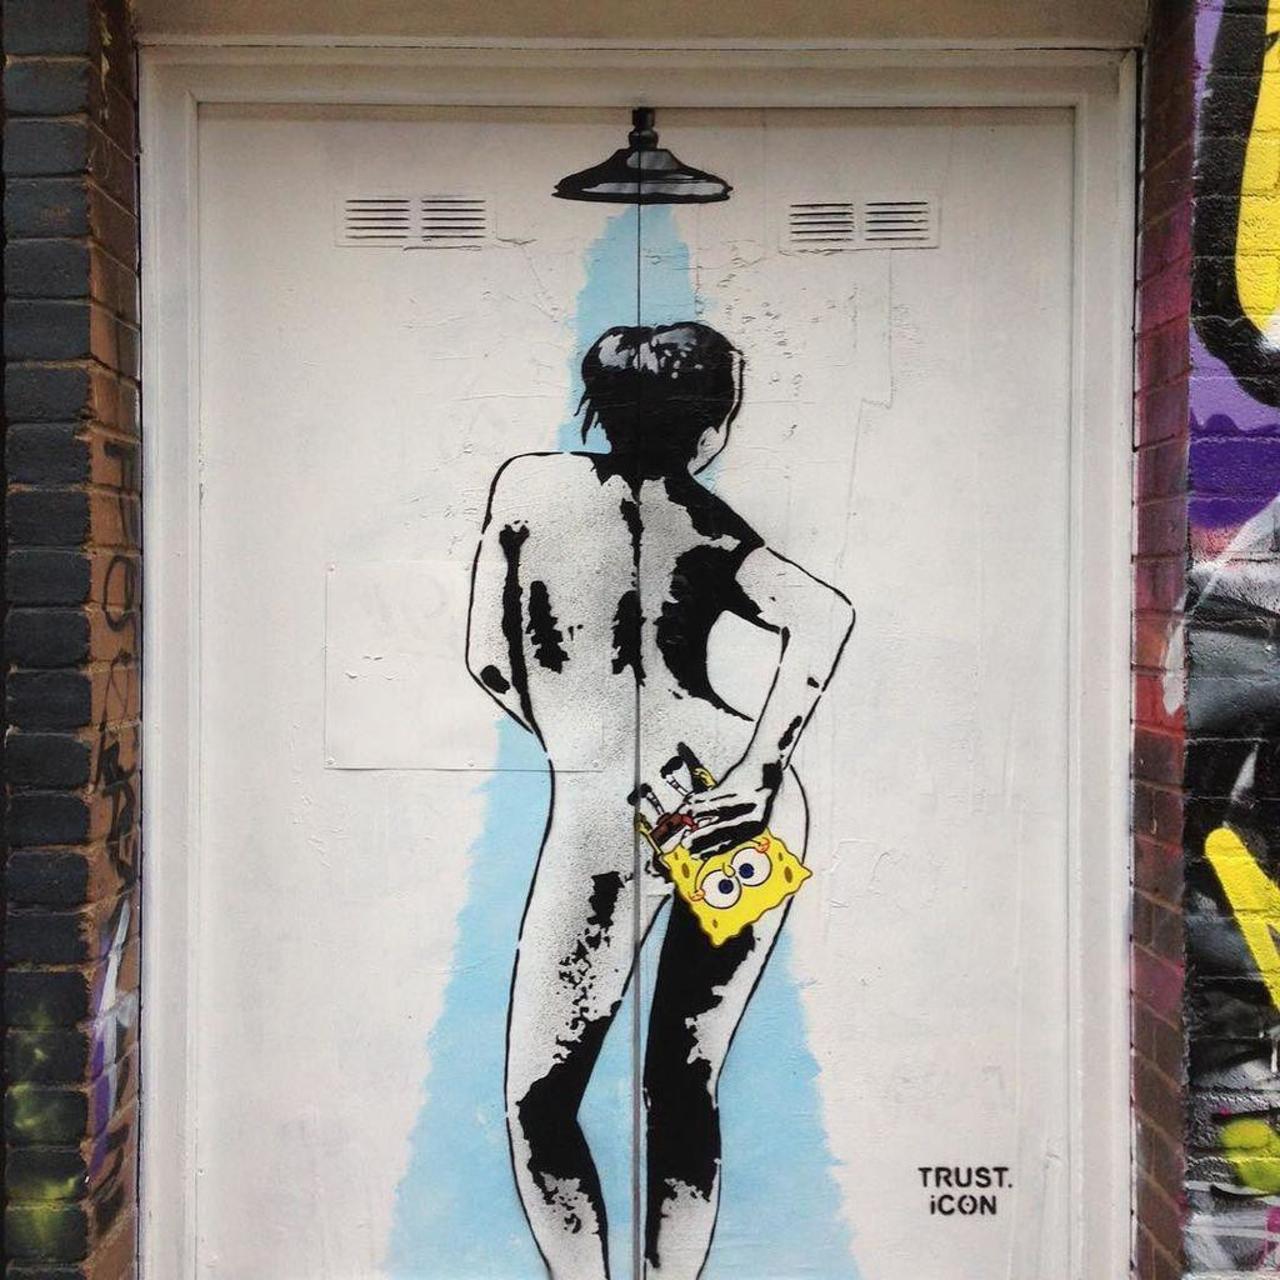 Sponge Bob by iCON 
Bethnal Green, East London. 
#trusticon #icon #art #streetart #graffiti #stencil #urbanart #lon… http://t.co/SID0C4ducX